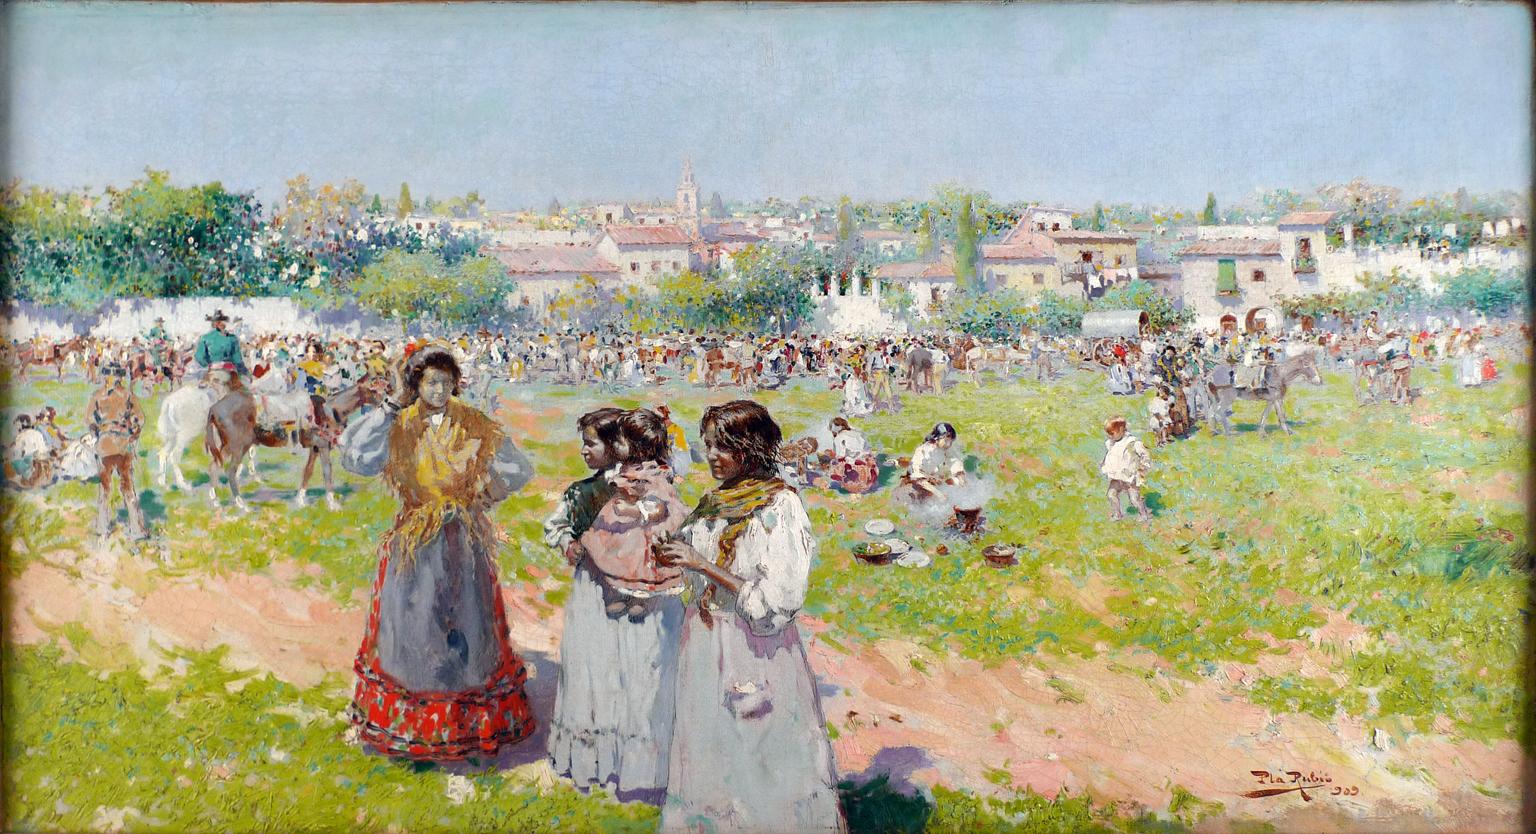 Alberto Plá y Rubio Figurative Painting - "At the Annual Fair", an early 20th Century oil on canvas by Alberto Plá Rubio